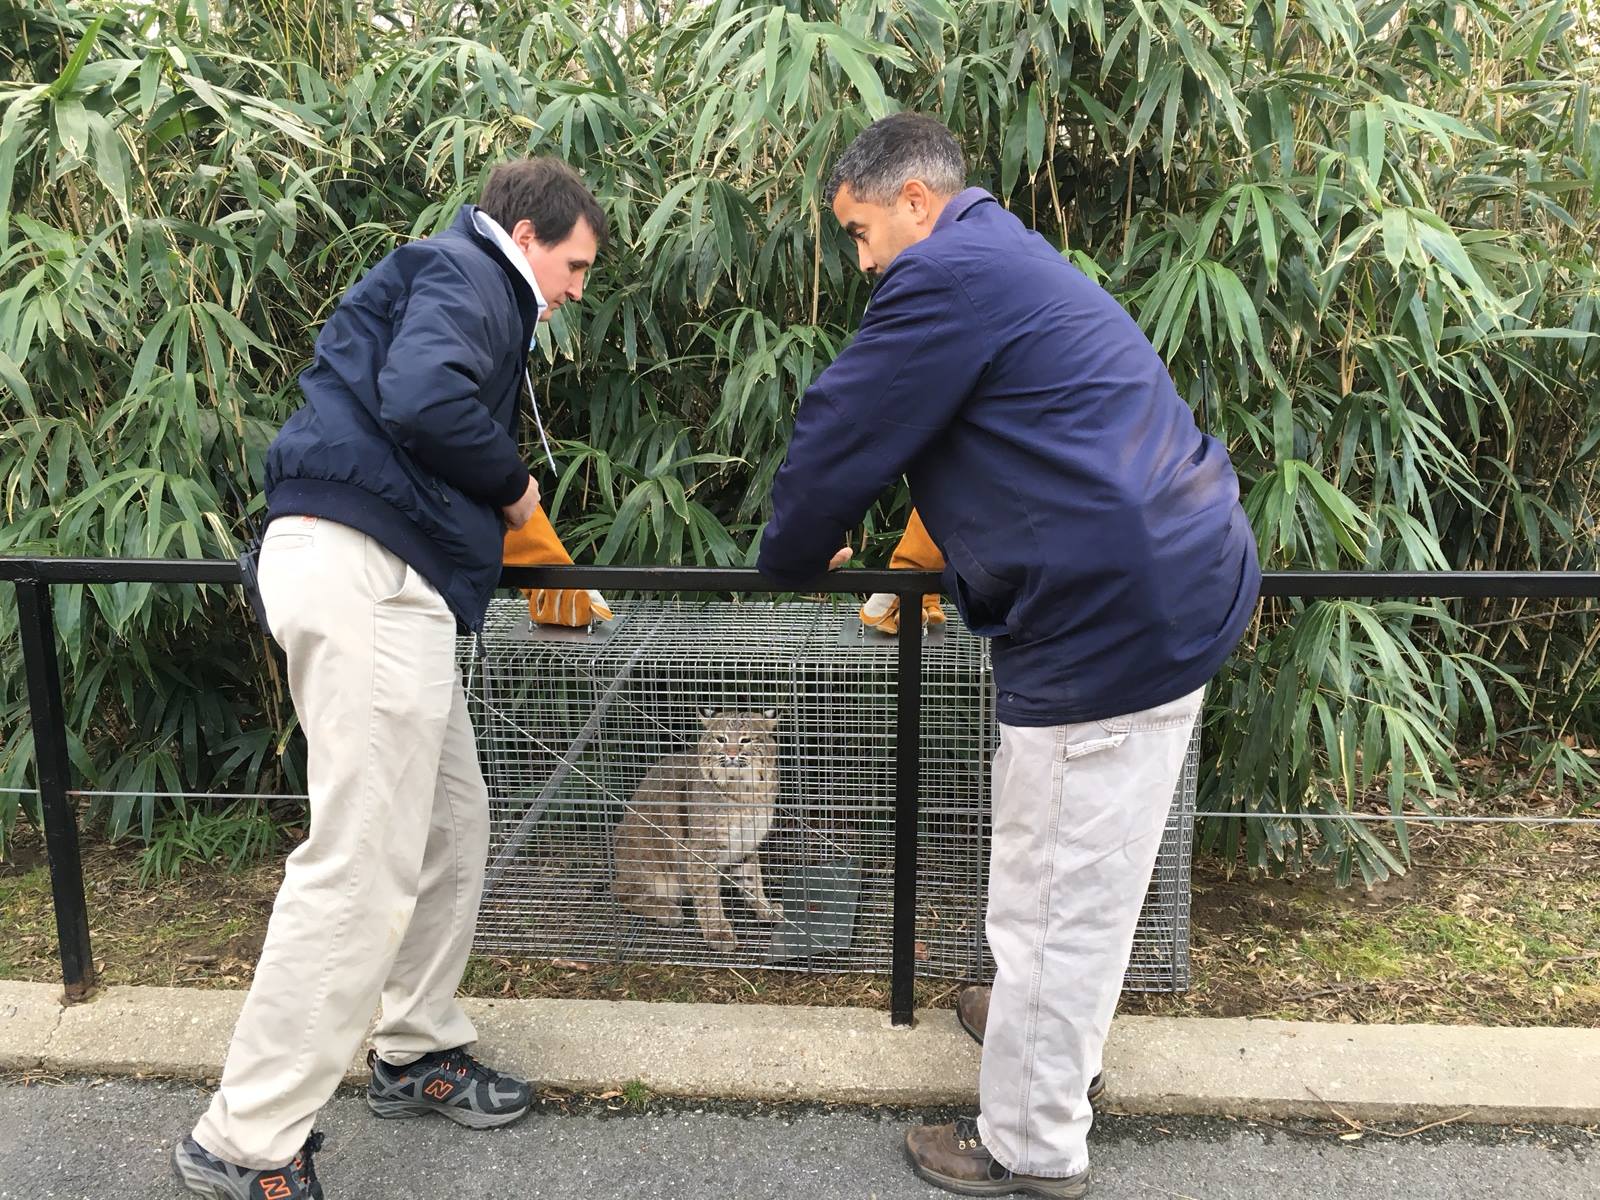 Female bobcat Ollie was found on National Zoo property Wednesday. (Courtesy National Zoo)